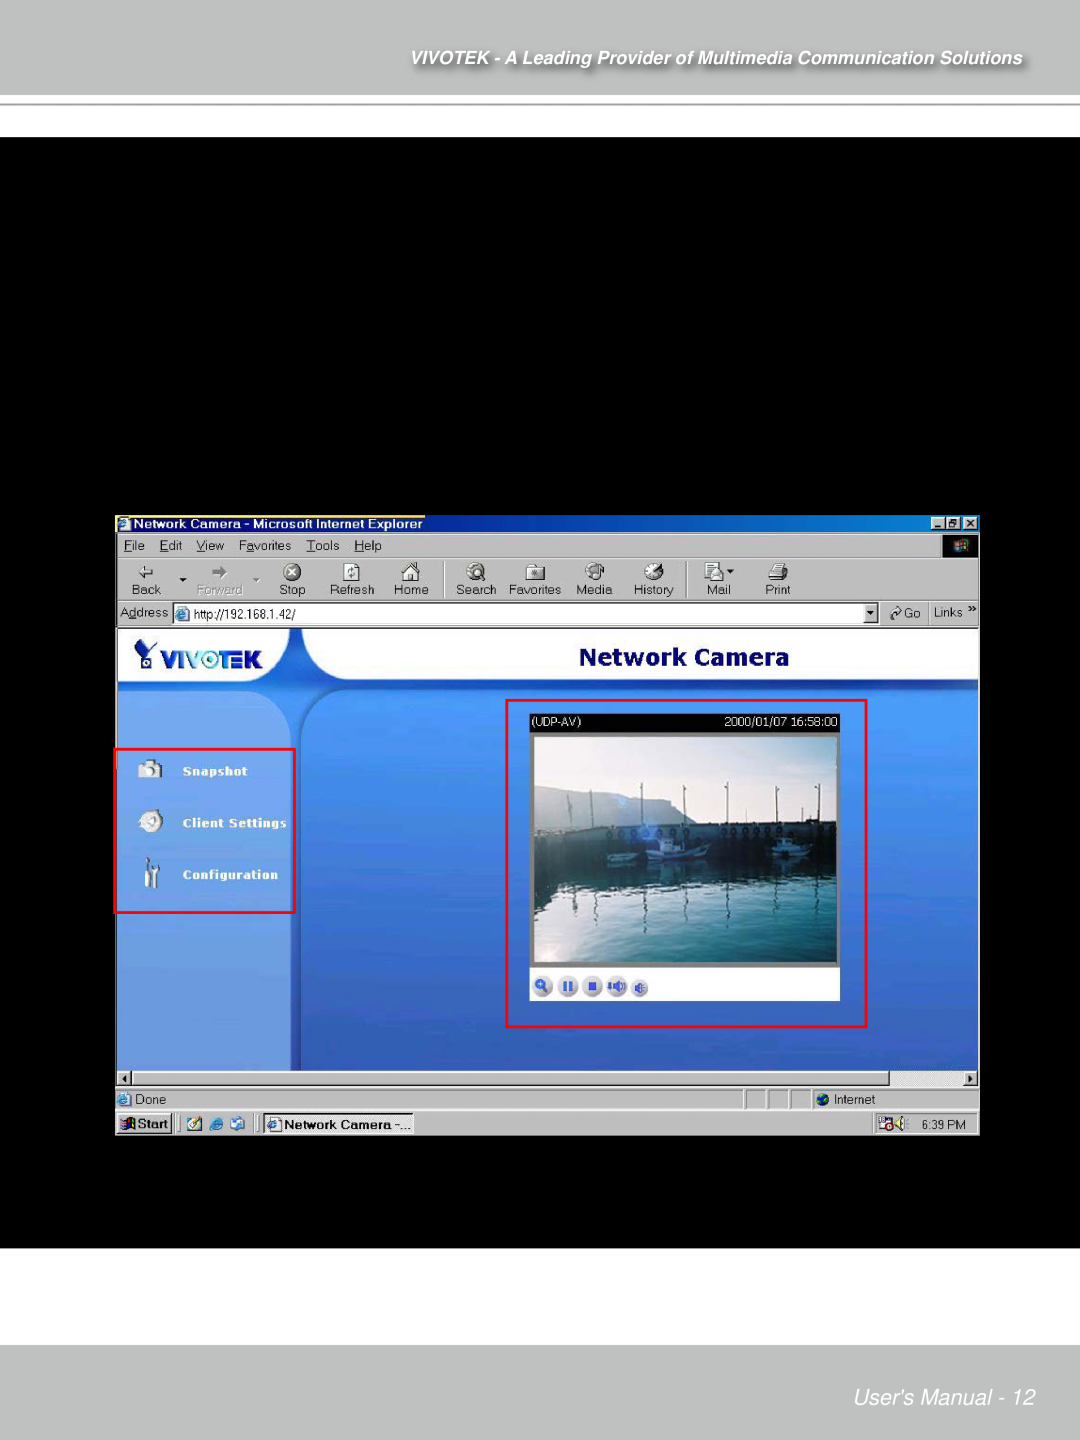 Vivotek IP7132 manual Primary user’s capability, Main Screen with Camera View 